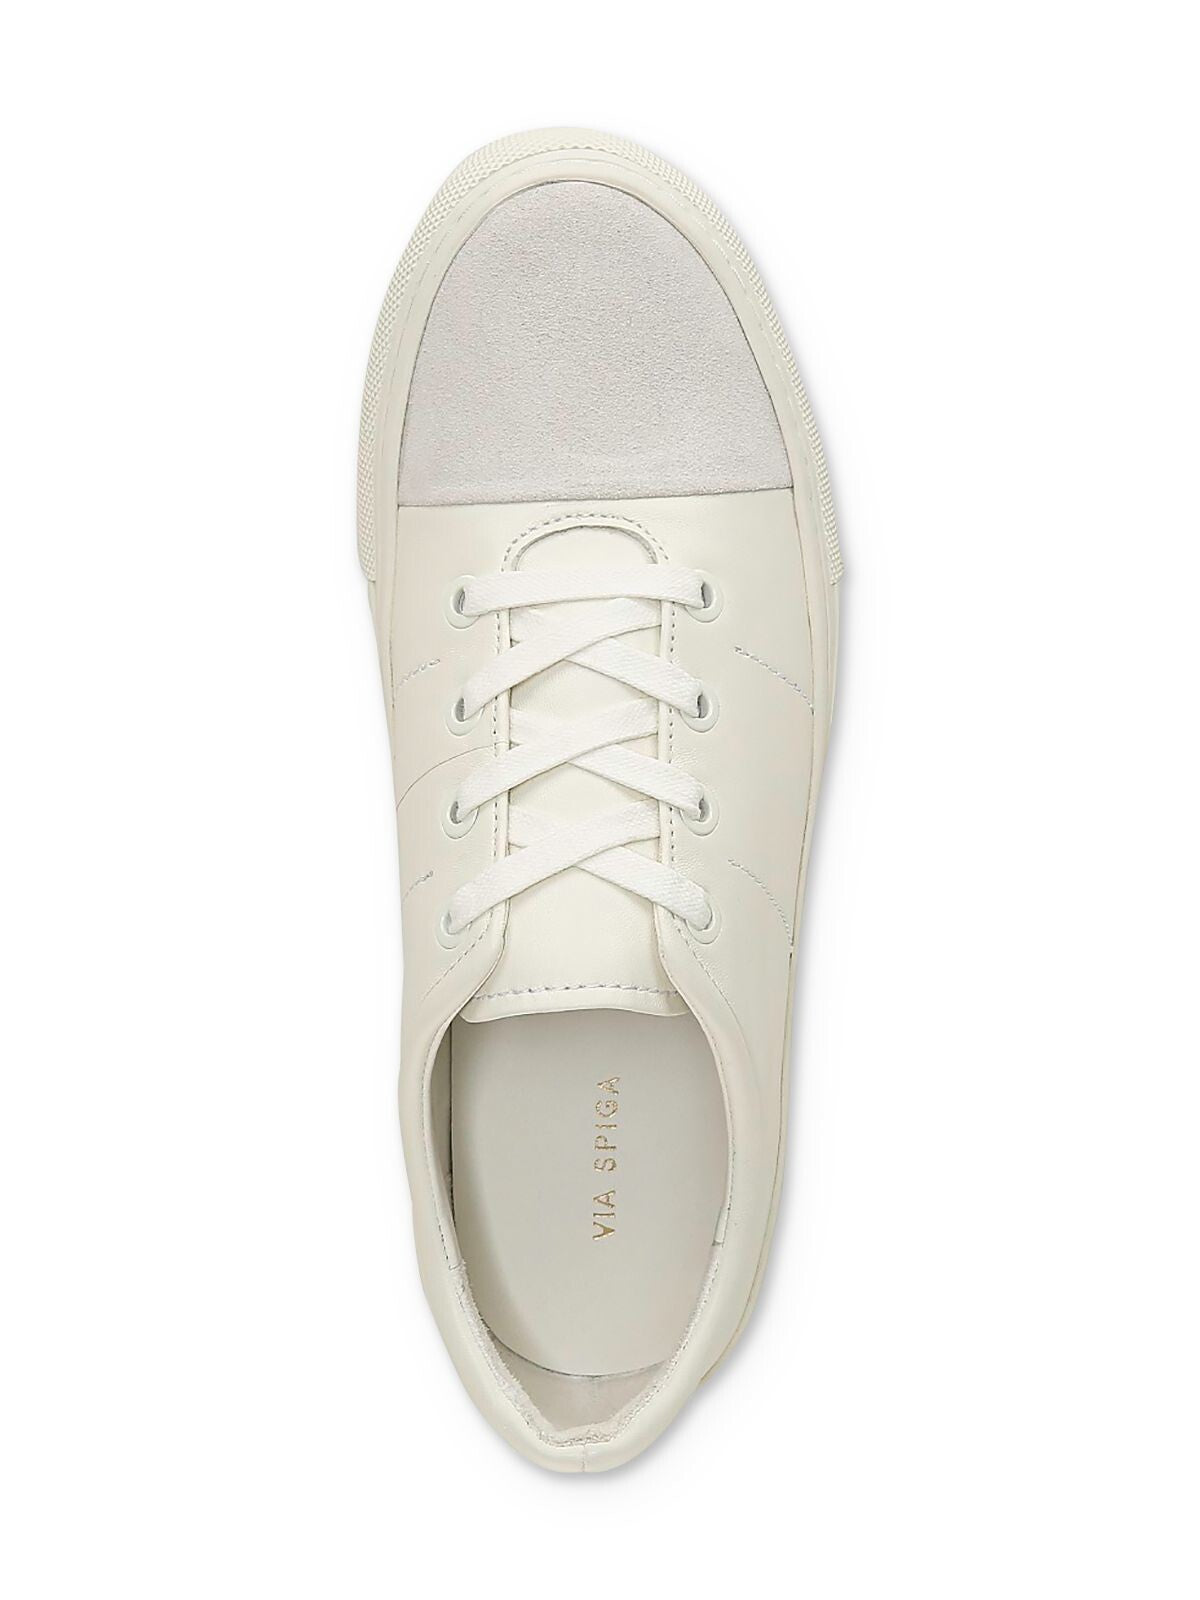 VIA SPIGA Womens White Comfort Sybil Cap Toe Platform Lace-Up Leather Athletic Sneakers Shoes 7 M